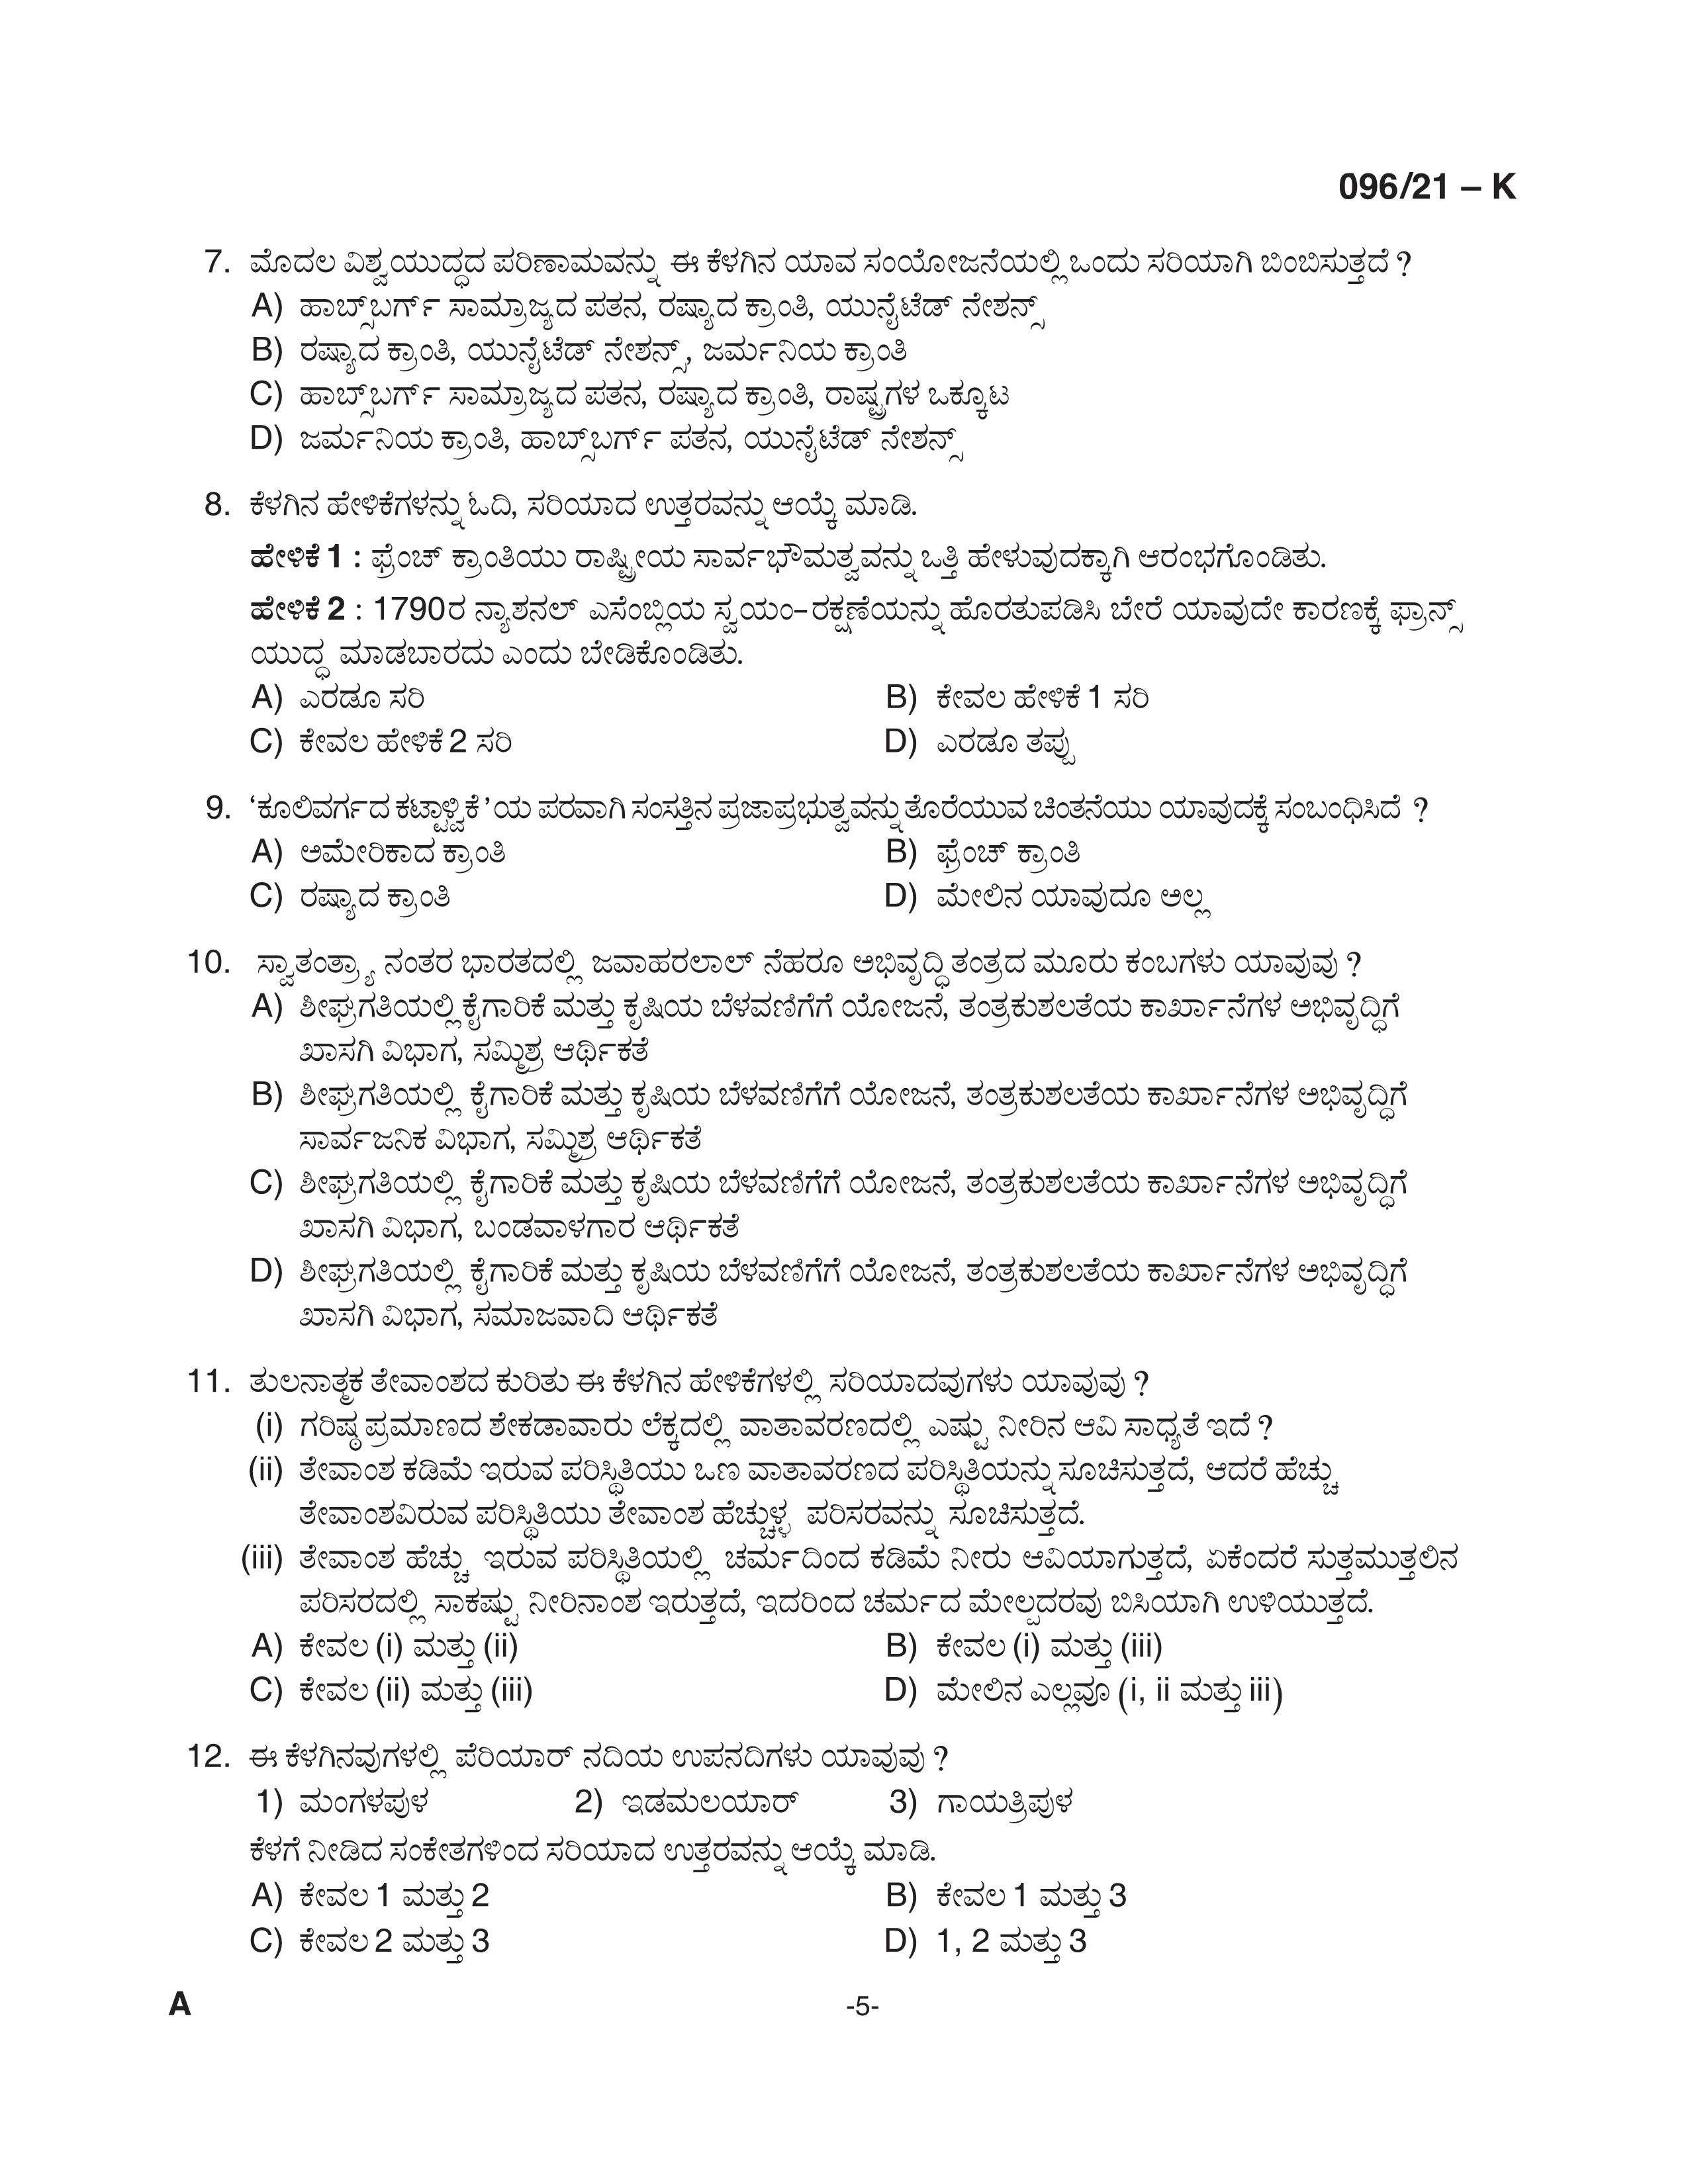 KPSC Degree Level Preliminary Exam Stage II Kannada 2021 Code 09621 K 5